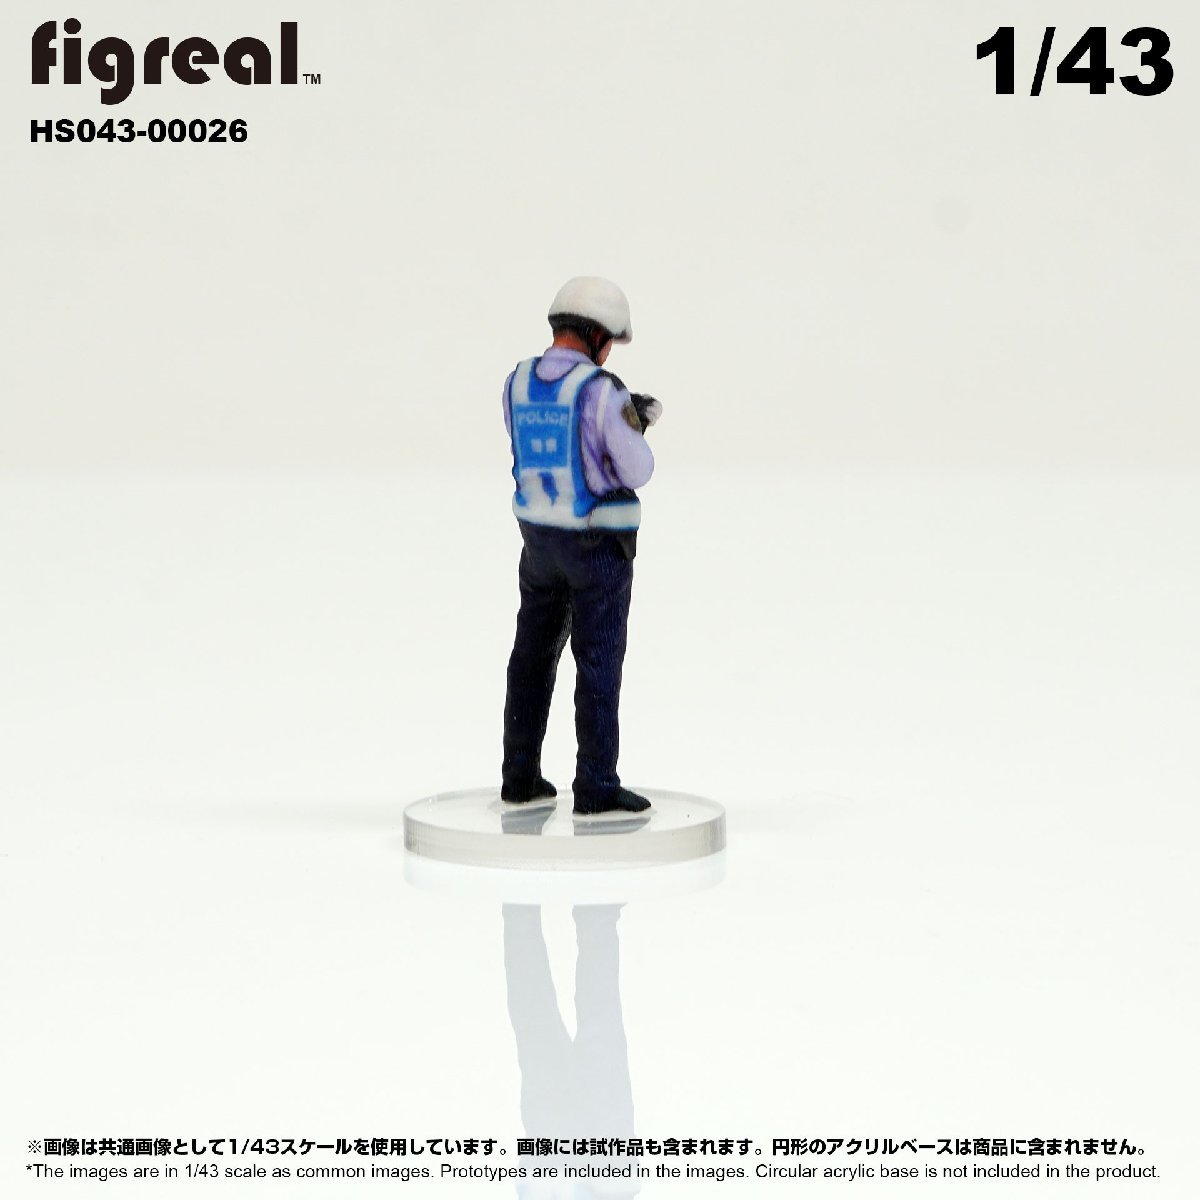 HS024-00018 figreal 日本交通機動隊 1/24 高精細フィギュア-